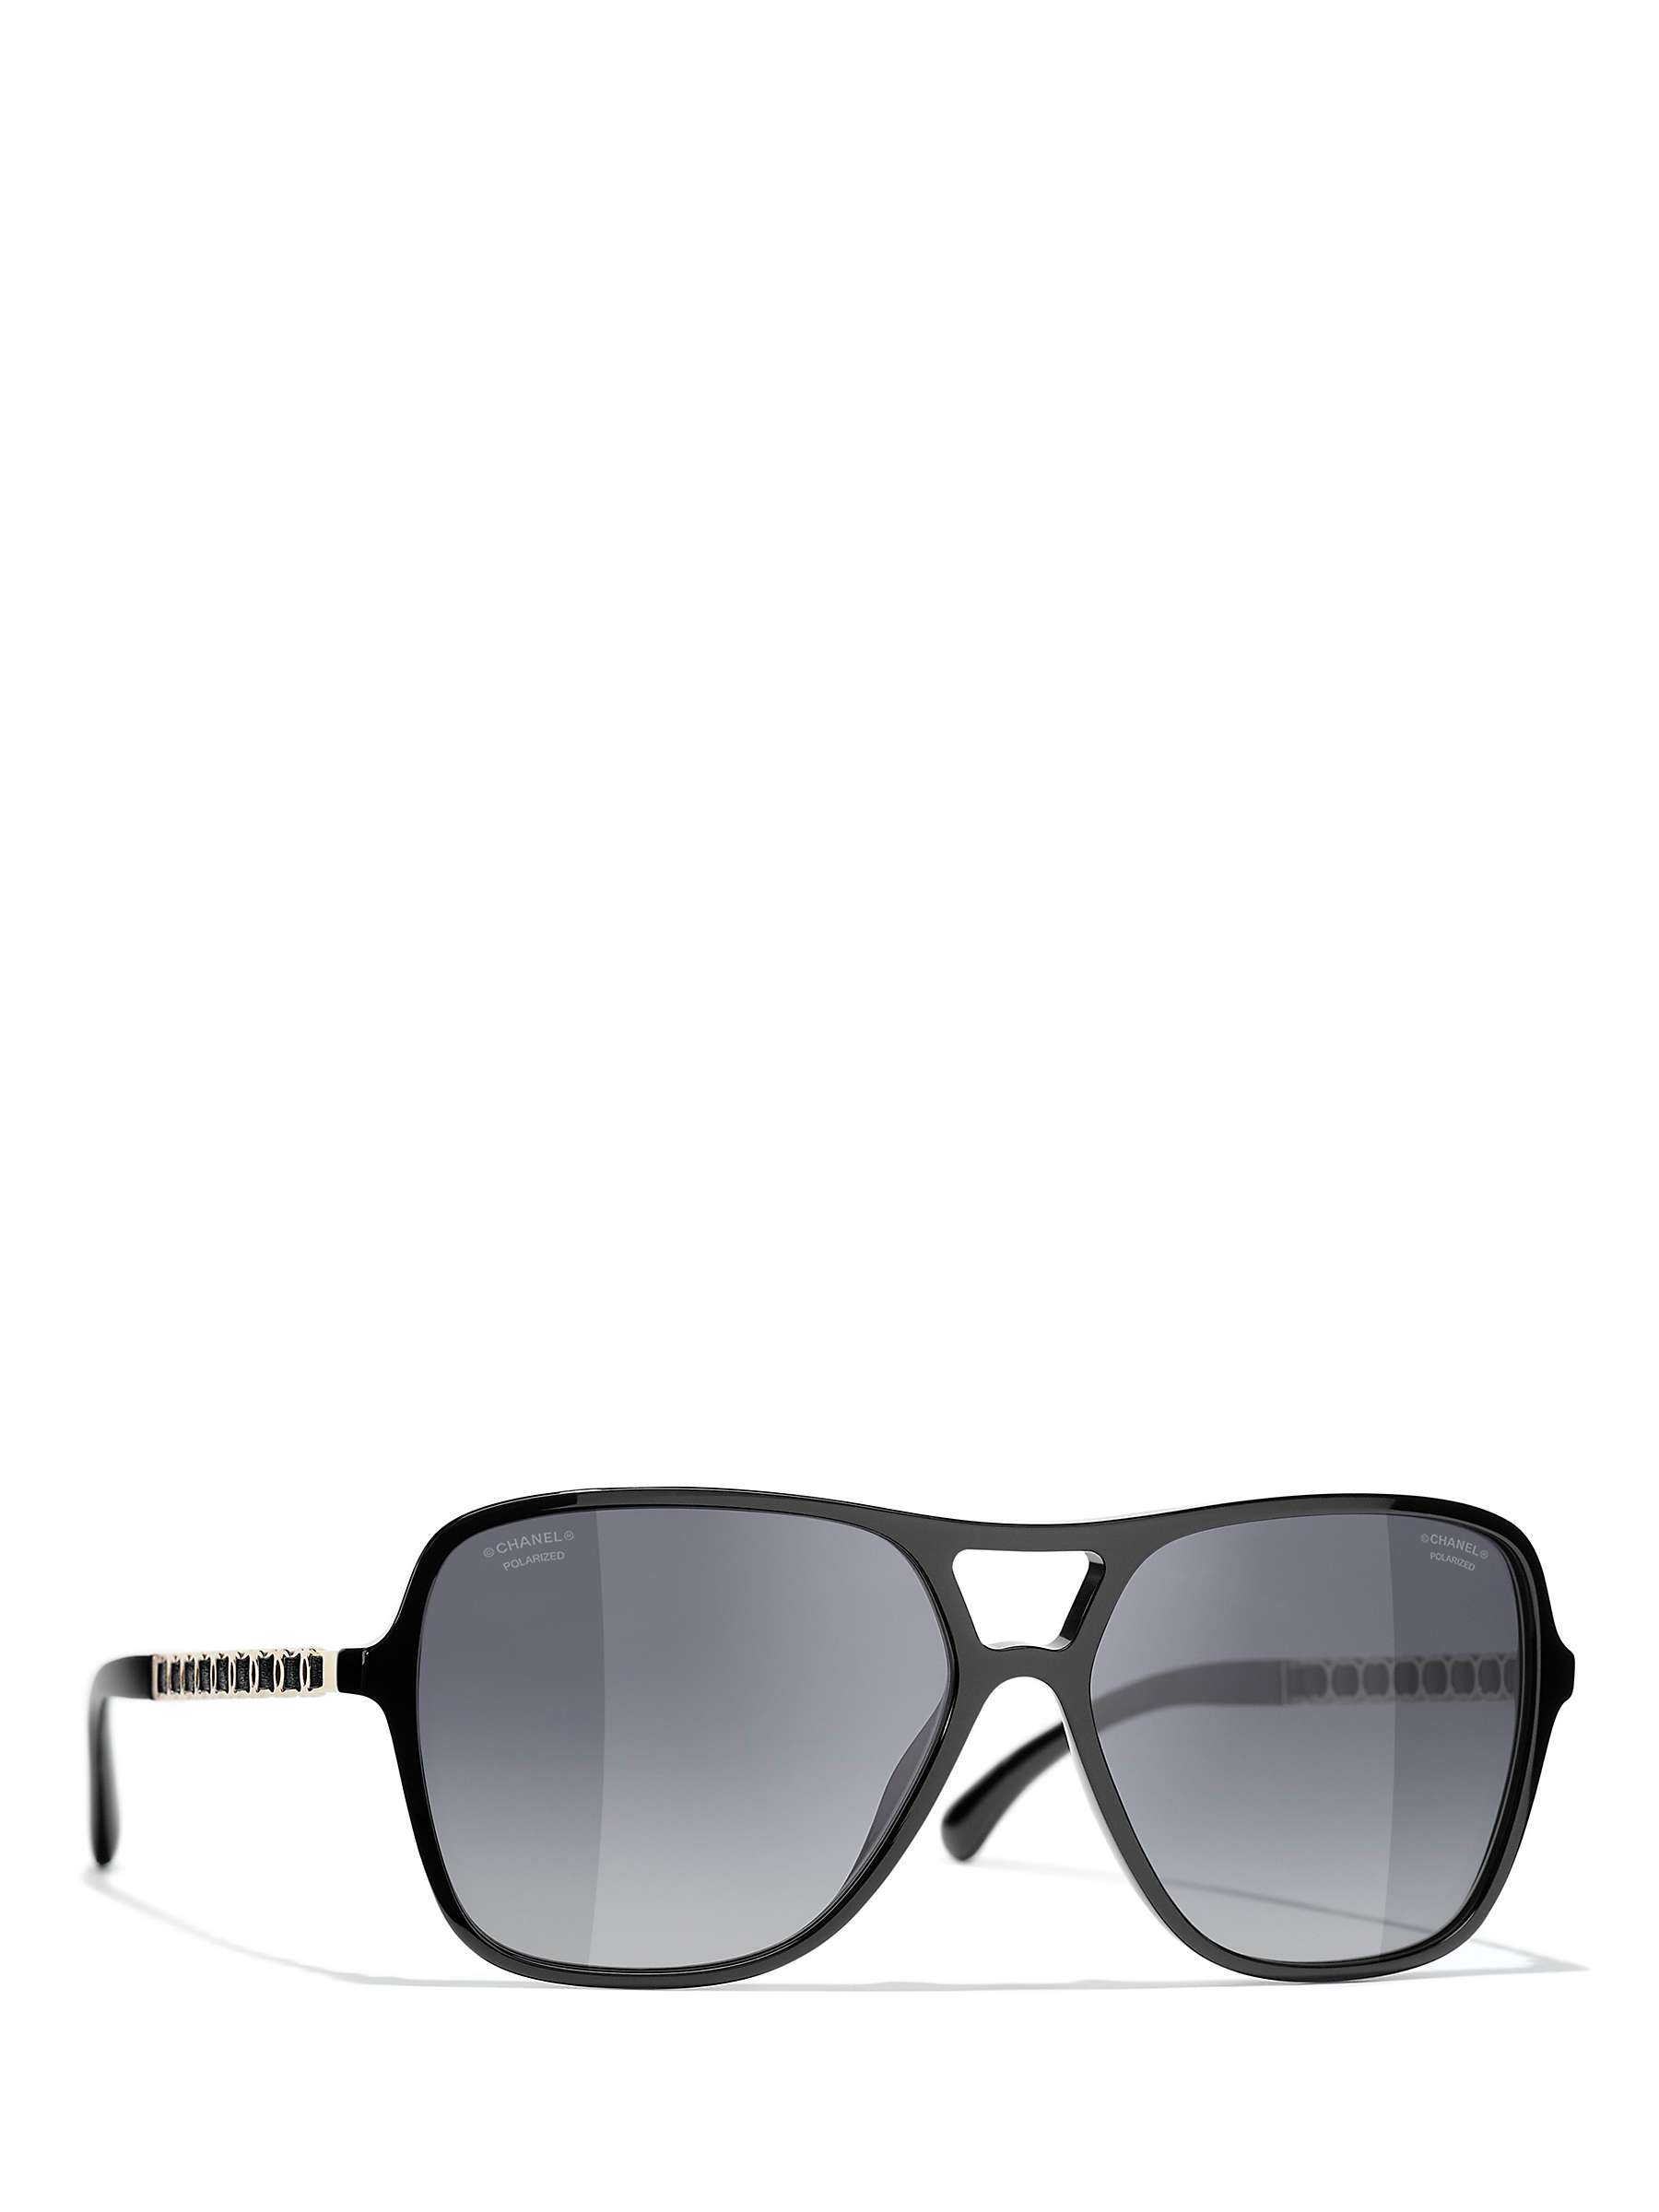 Buy CHANEL Square Sunglasses CH5439Q Black/Grey Gradient Online at johnlewis.com